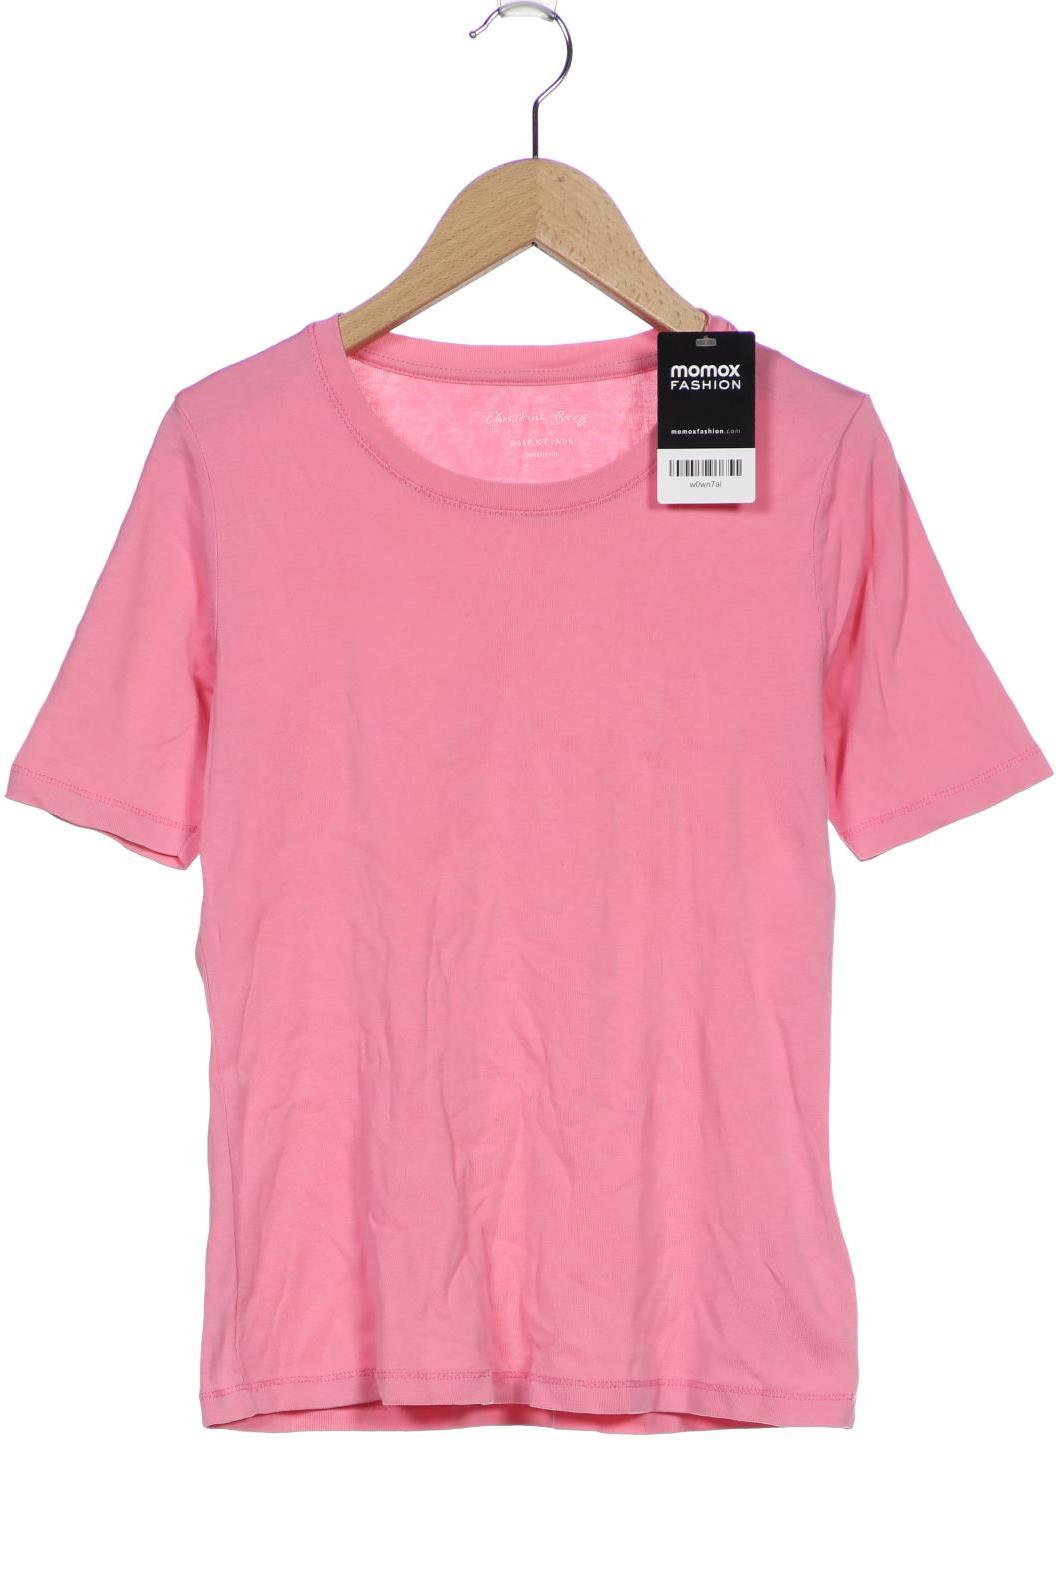 Christian Berg Damen T-Shirt, pink von christian berg